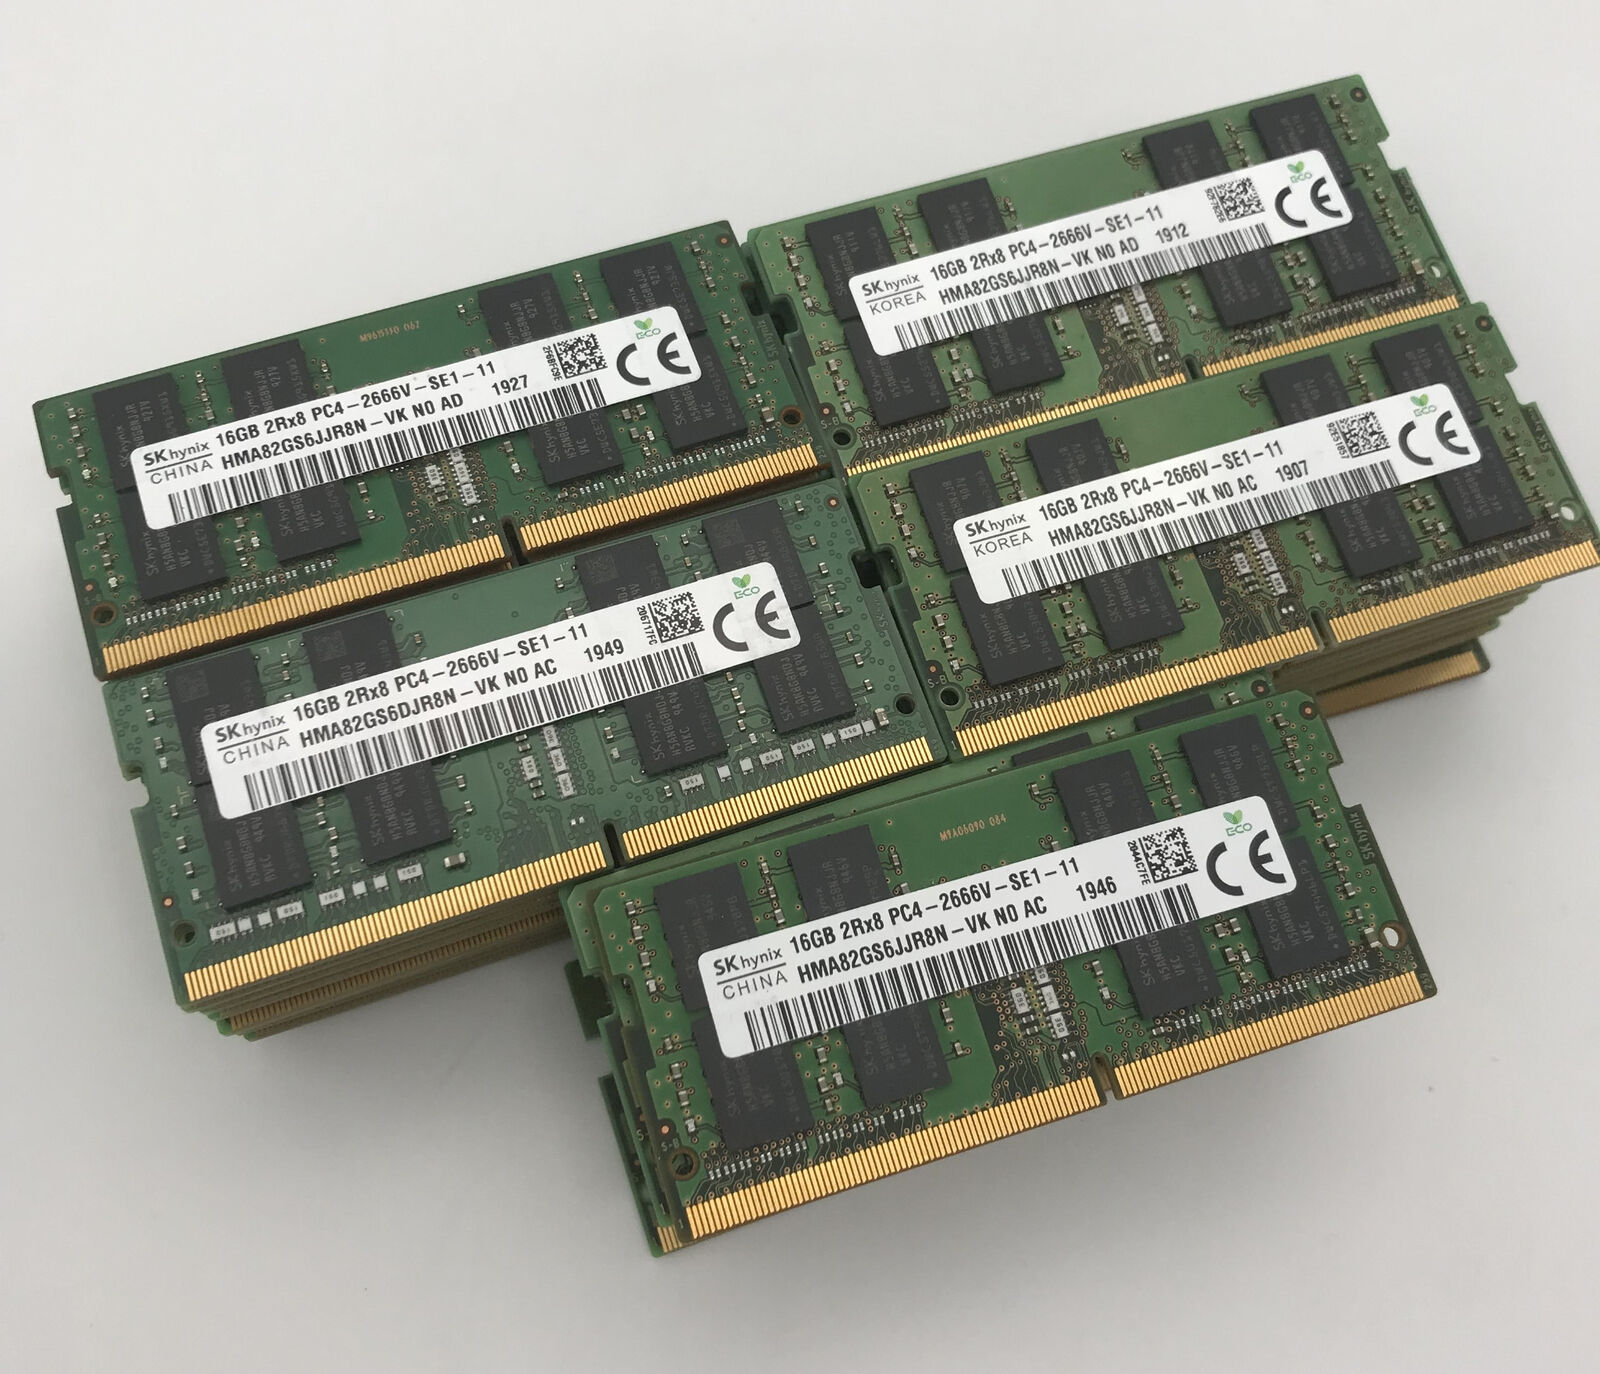 LOT OF 50 SKHYNIX 16GB 2RX8 PC4-2666V DDR4 SODIMM MIXED MODELS MEMORY RAM TESTED